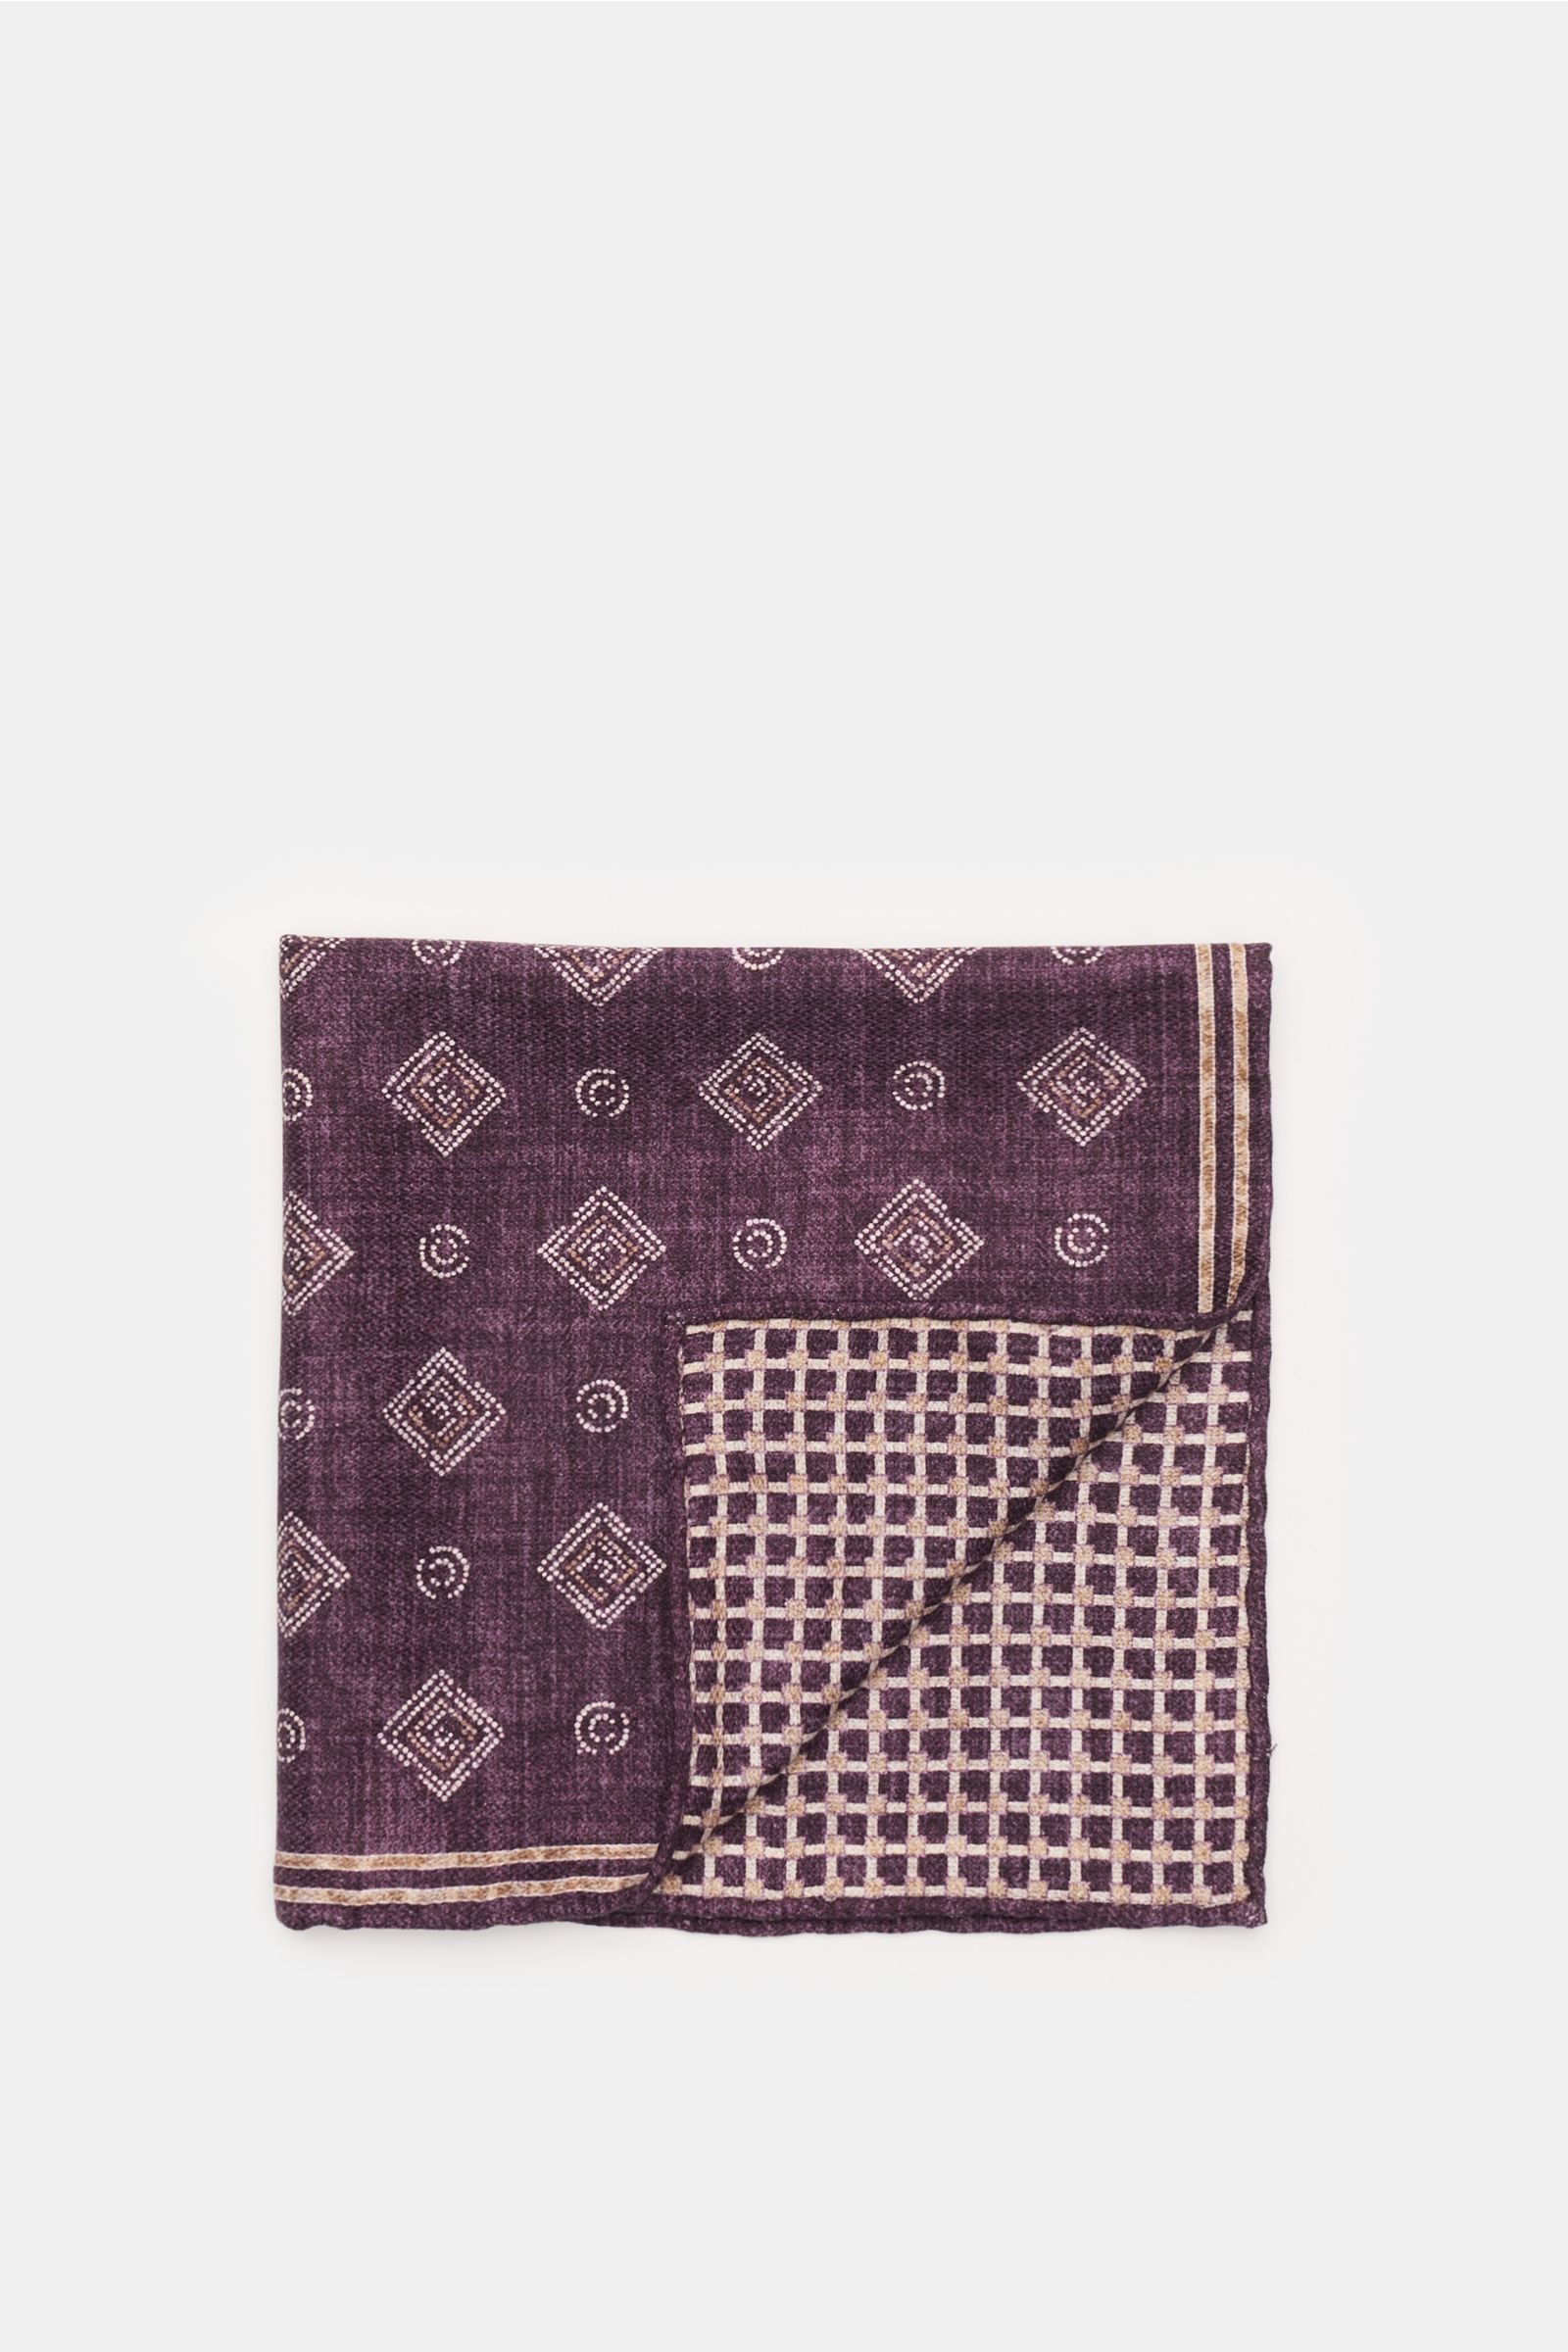 Pocket square purple/grey-brown patterned